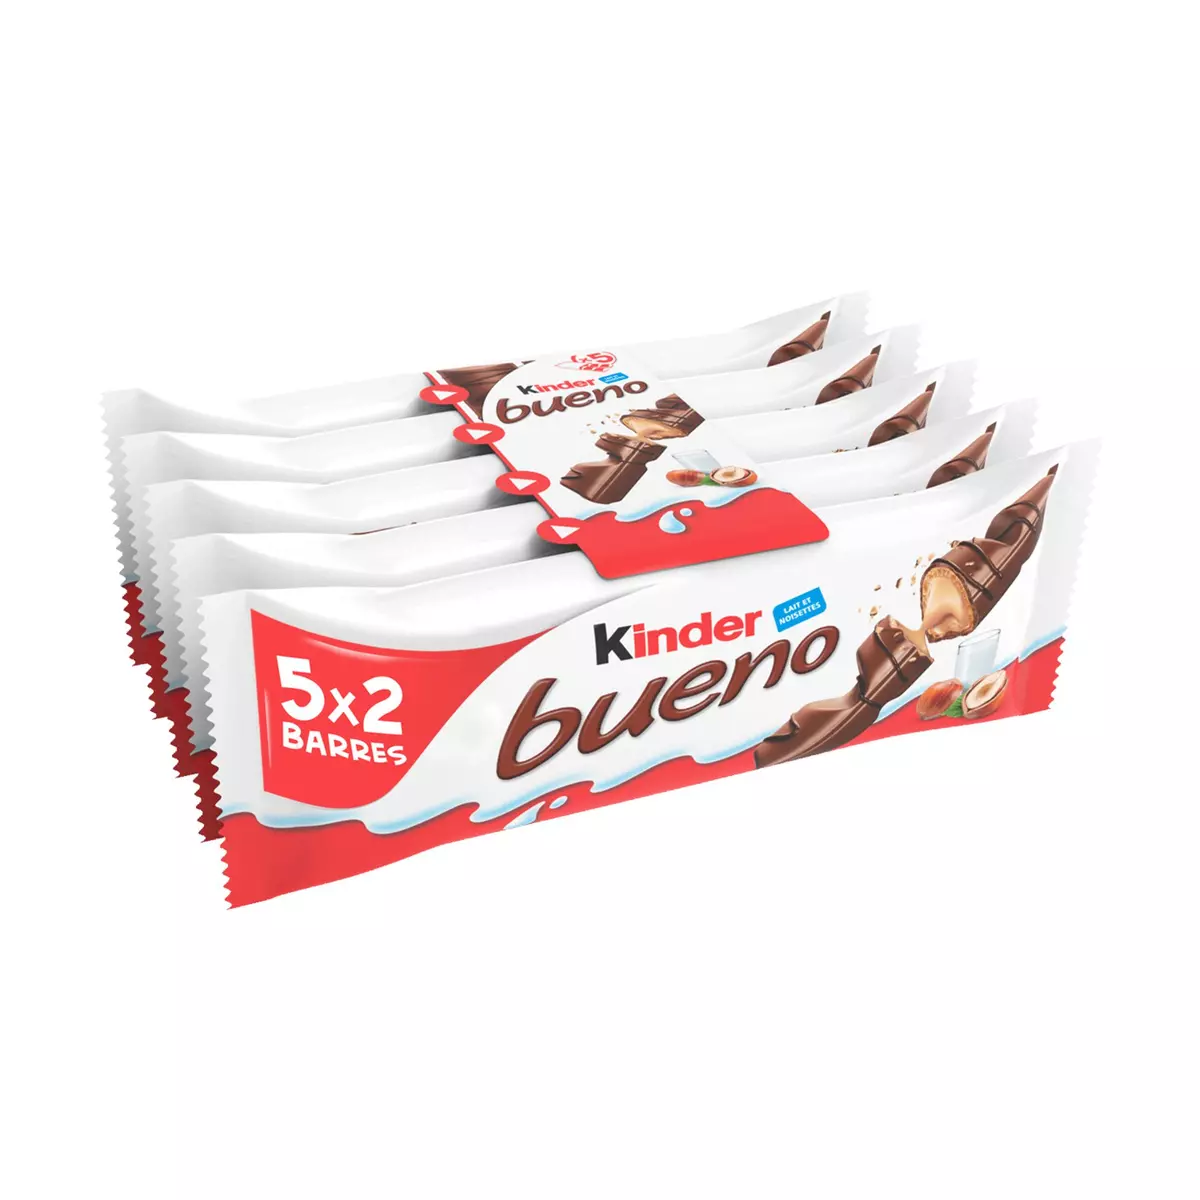 KINDER Bueno barres chocolatées 5x2 barres 220g